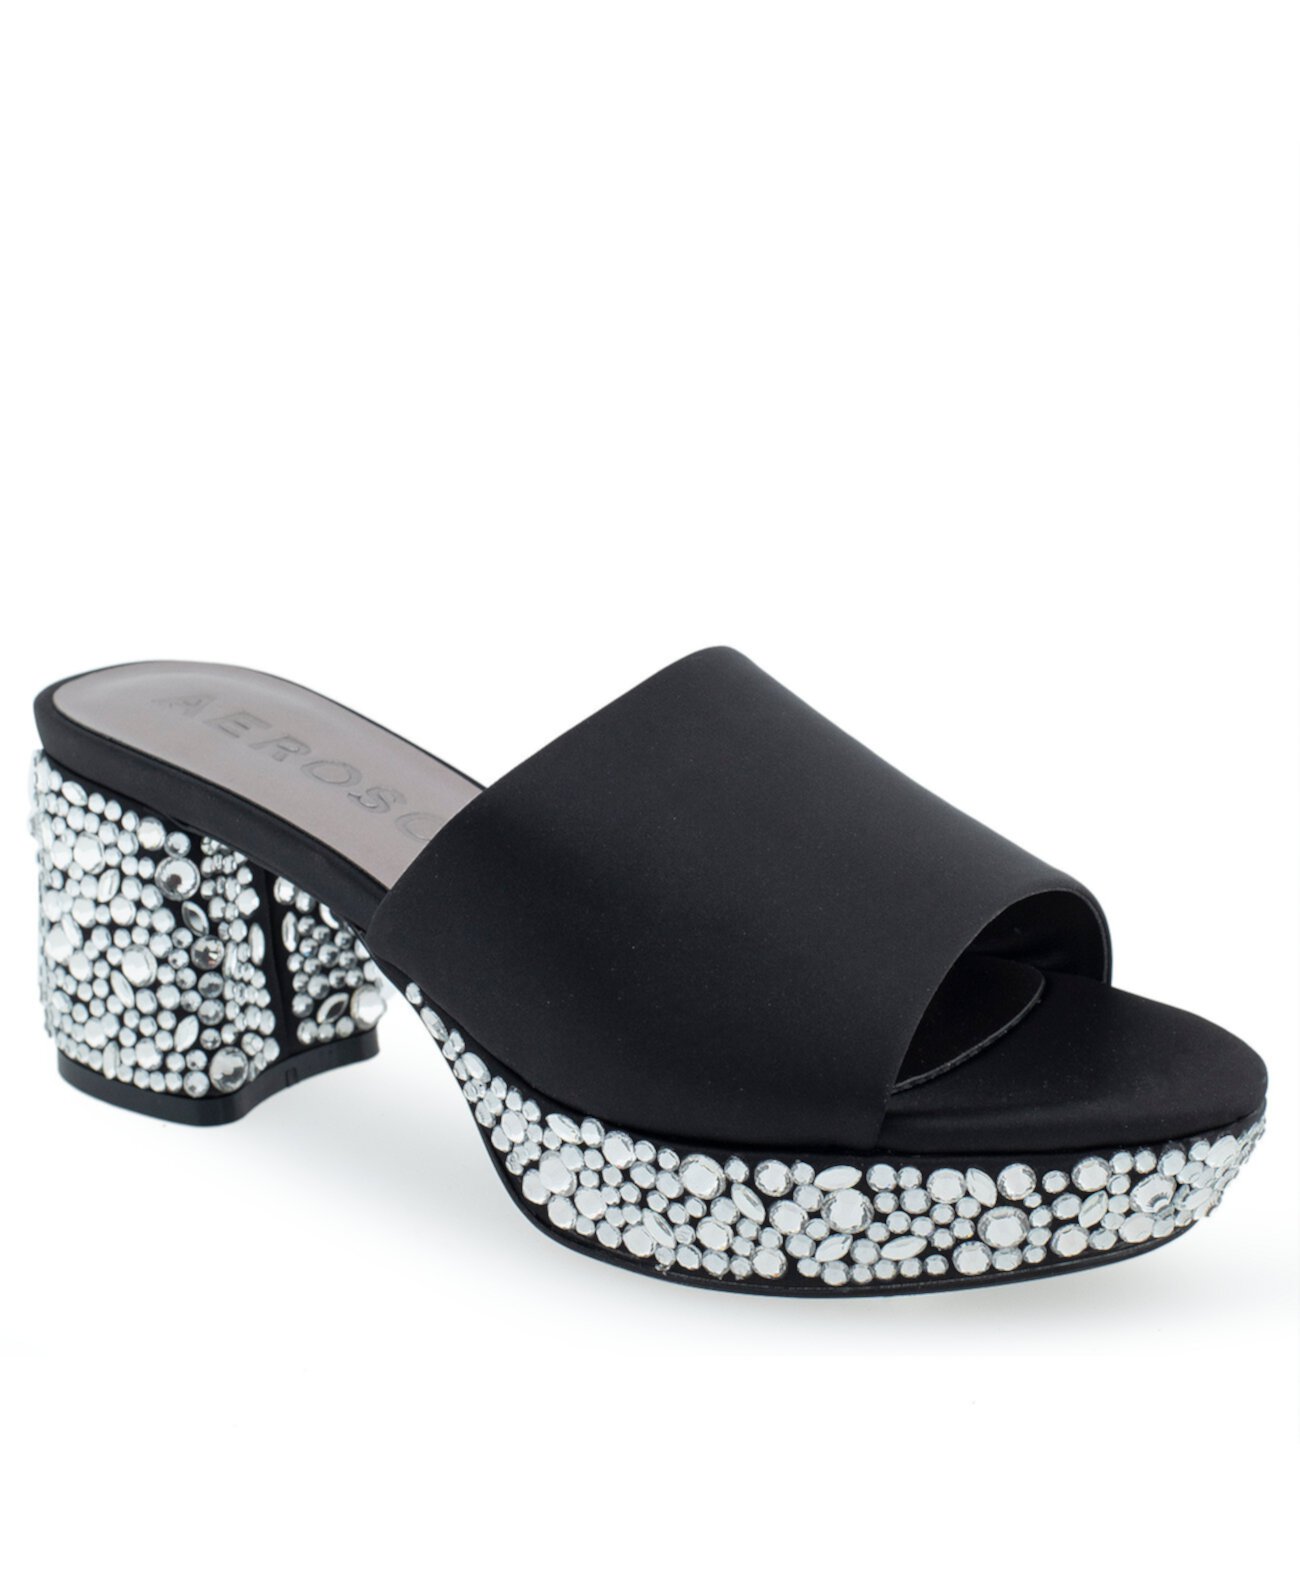 Женские туфли без шнуровки на блочном каблуке со стразами Coraline Aerosoles